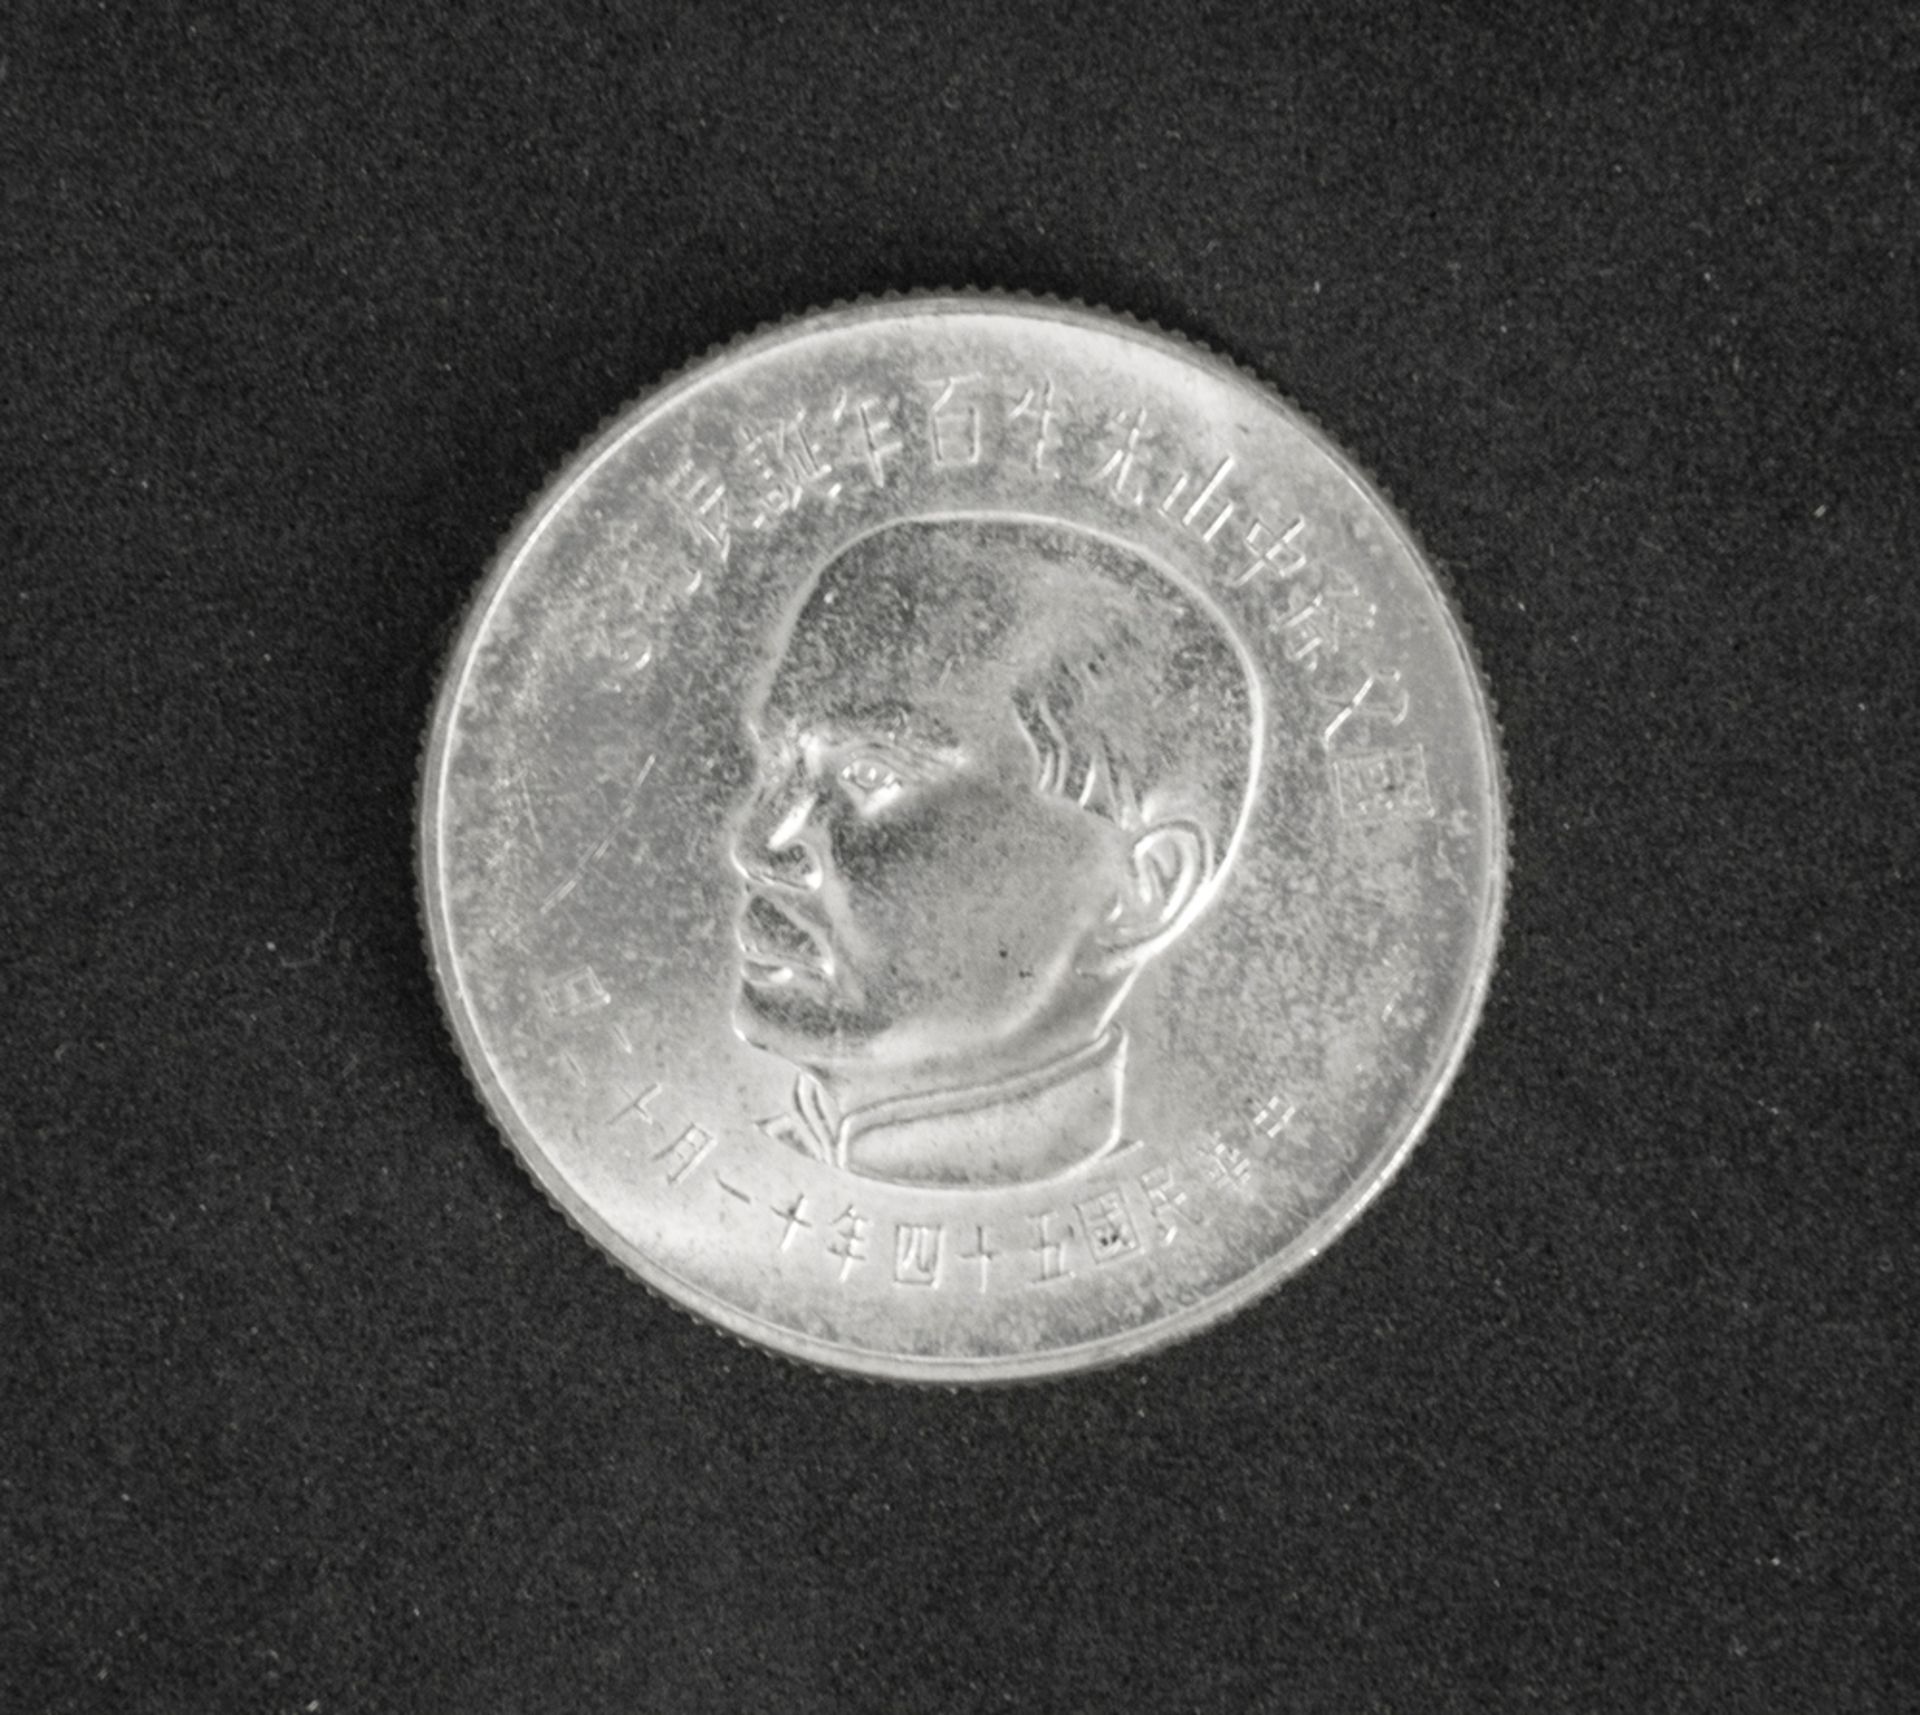 Taiwan 1965, 50 Dollar - Silbermünze. Erhaltung: ss.